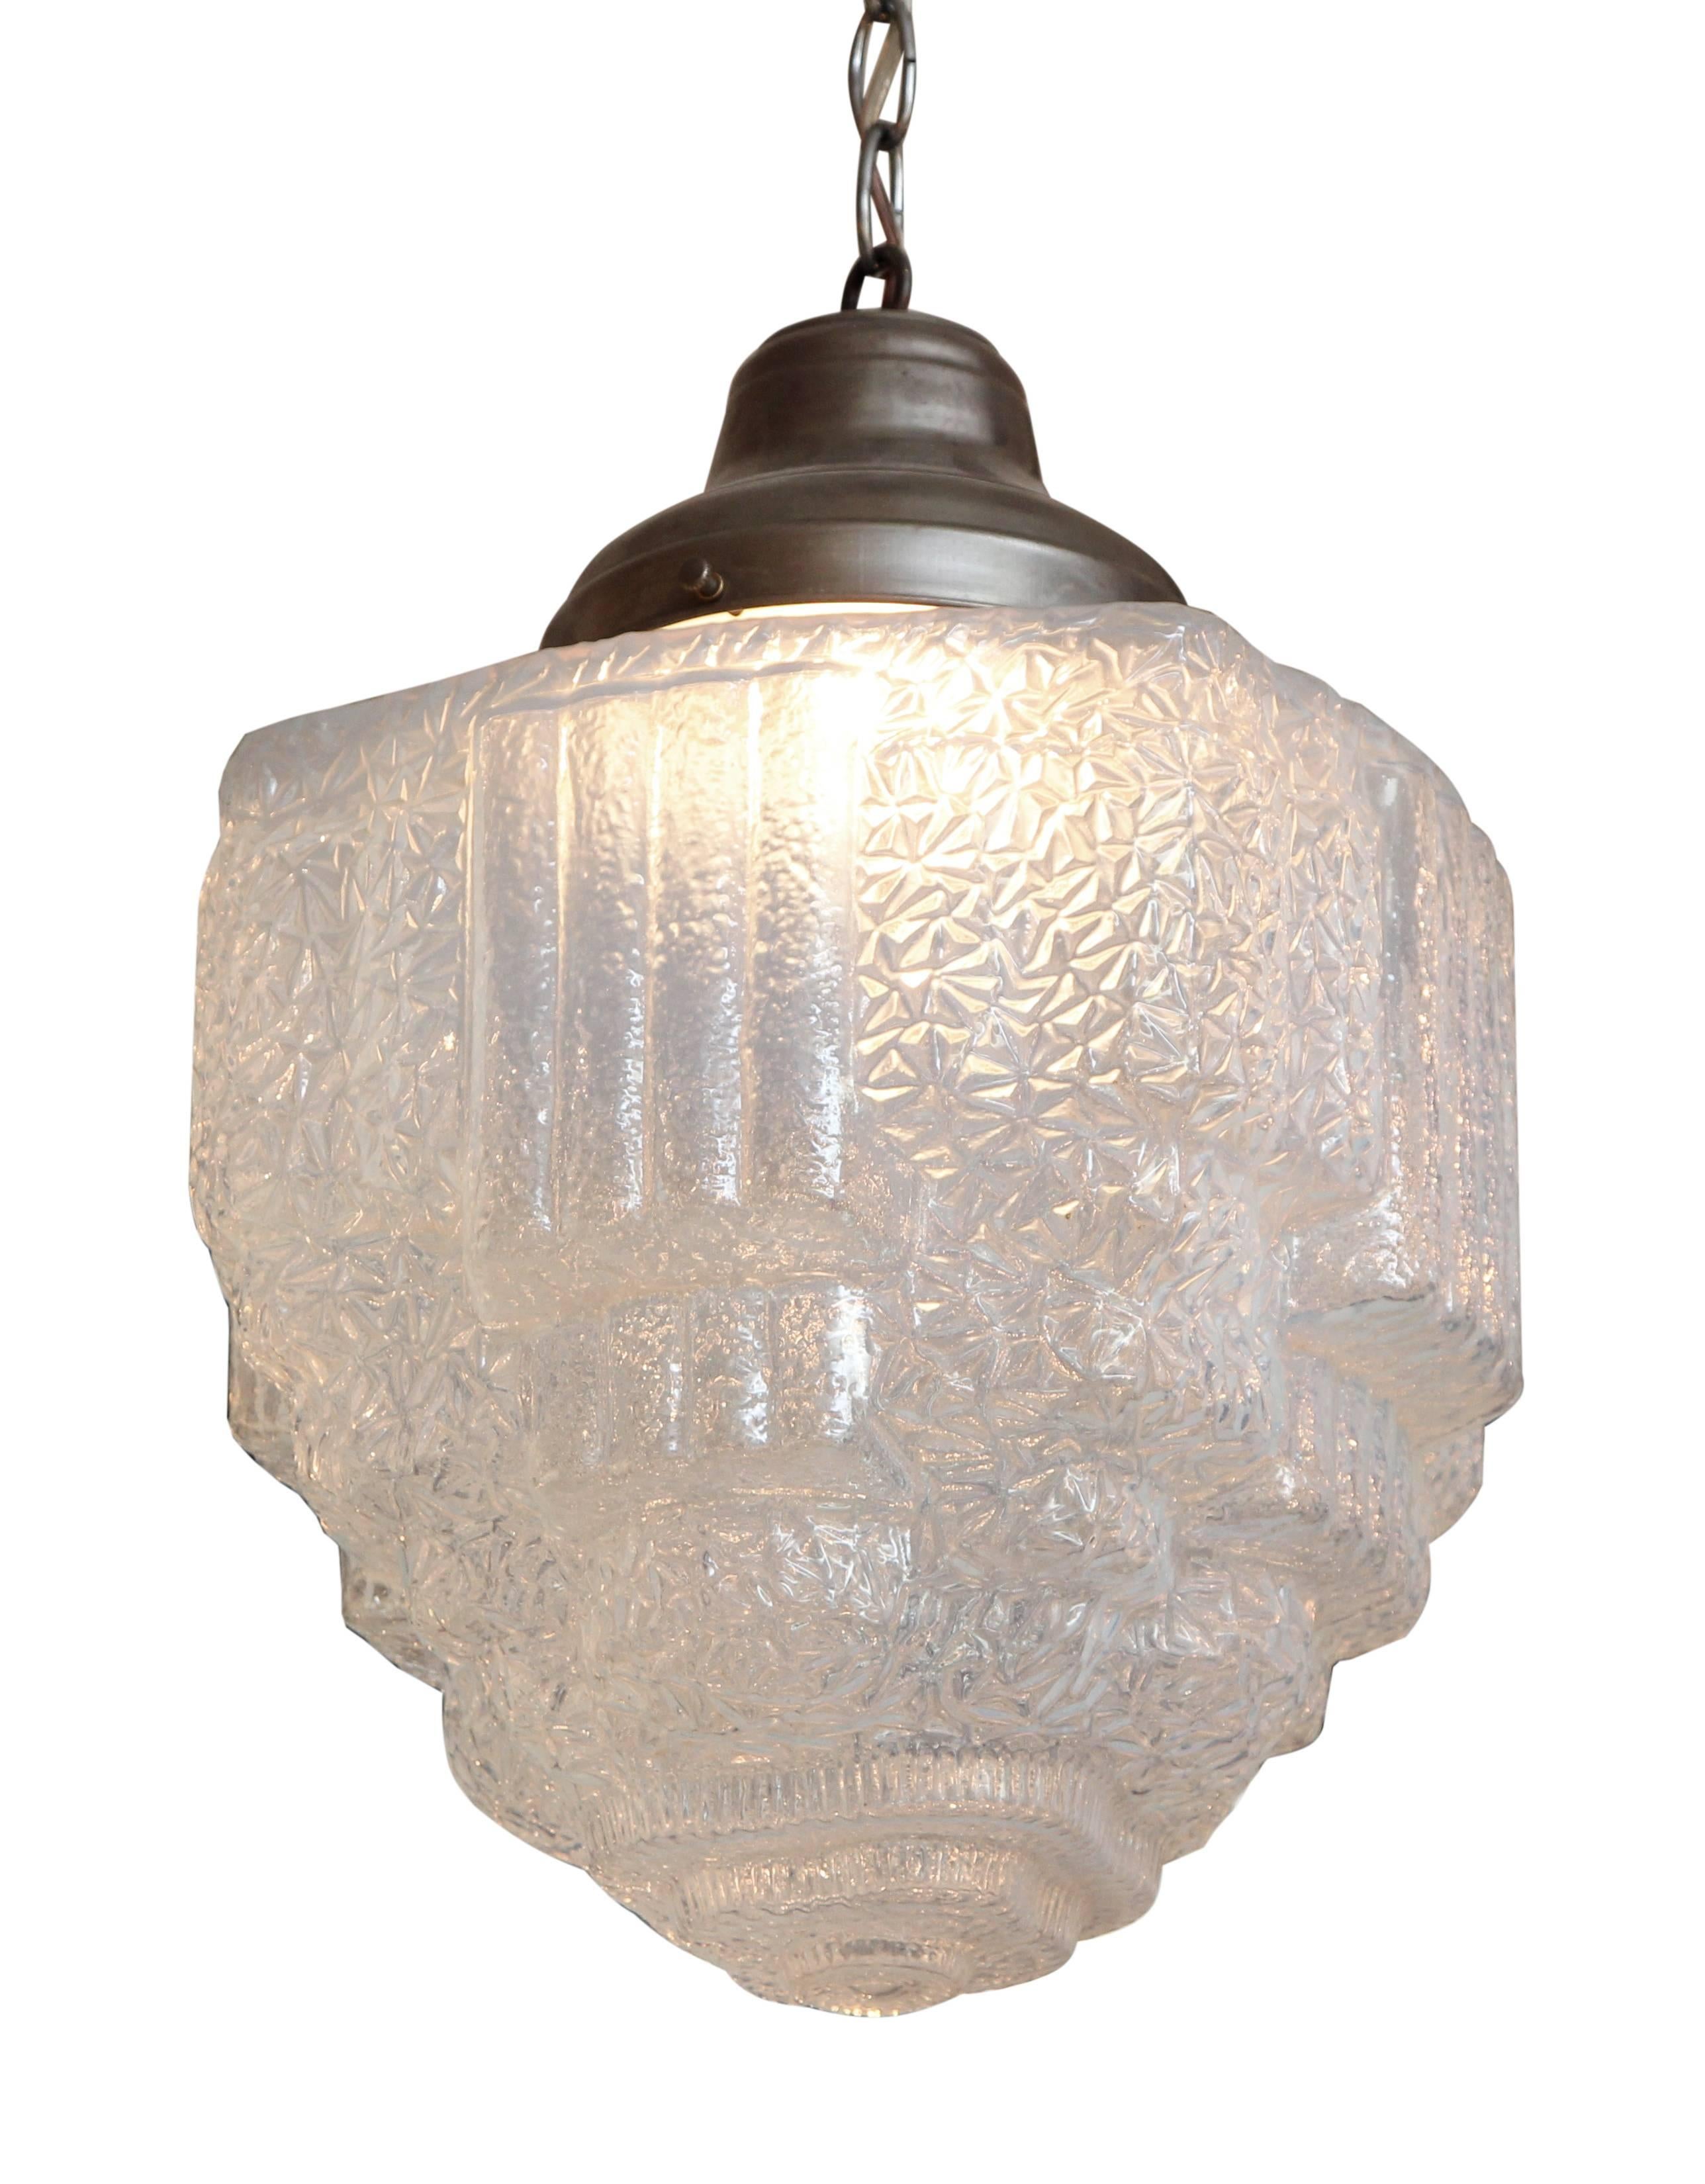 Rare 1930s textured opalescent cast textured glass Art Deco light fixture with original fitter. Sometimes called an 